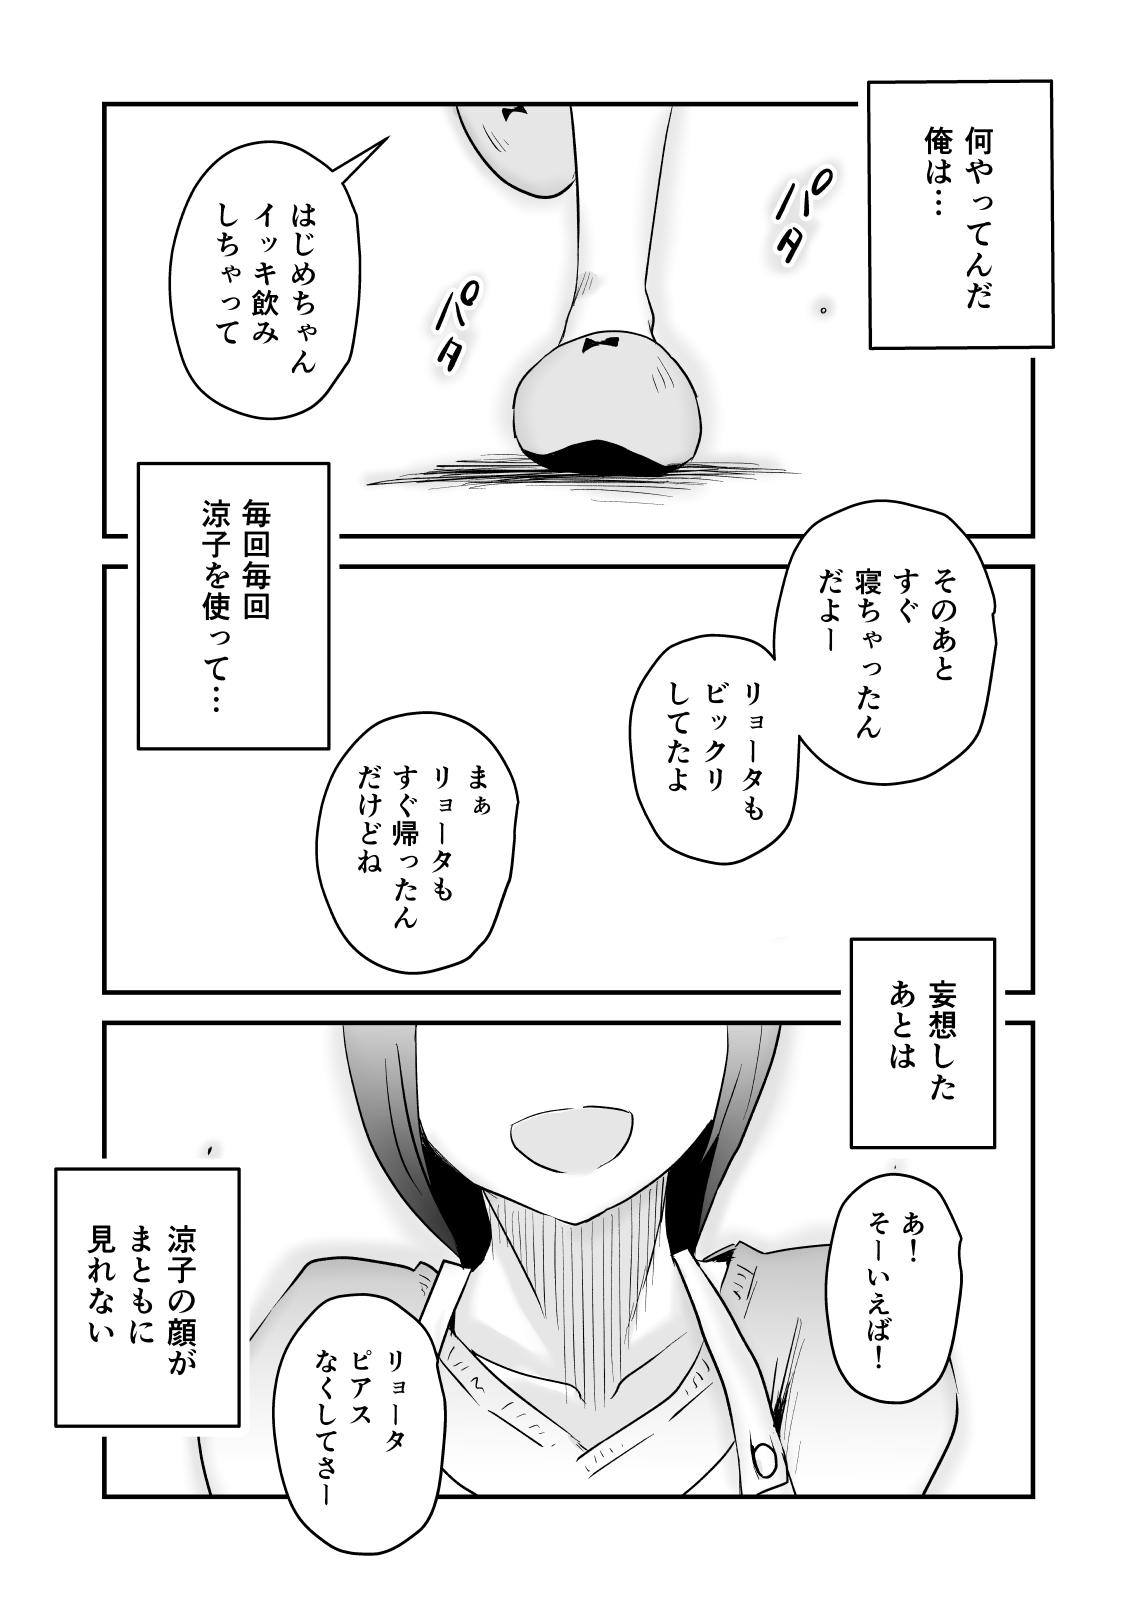 Netorare Mousou Syndrome Page 50 Of 56 hentai manga, Netorare Mousou Syndro...